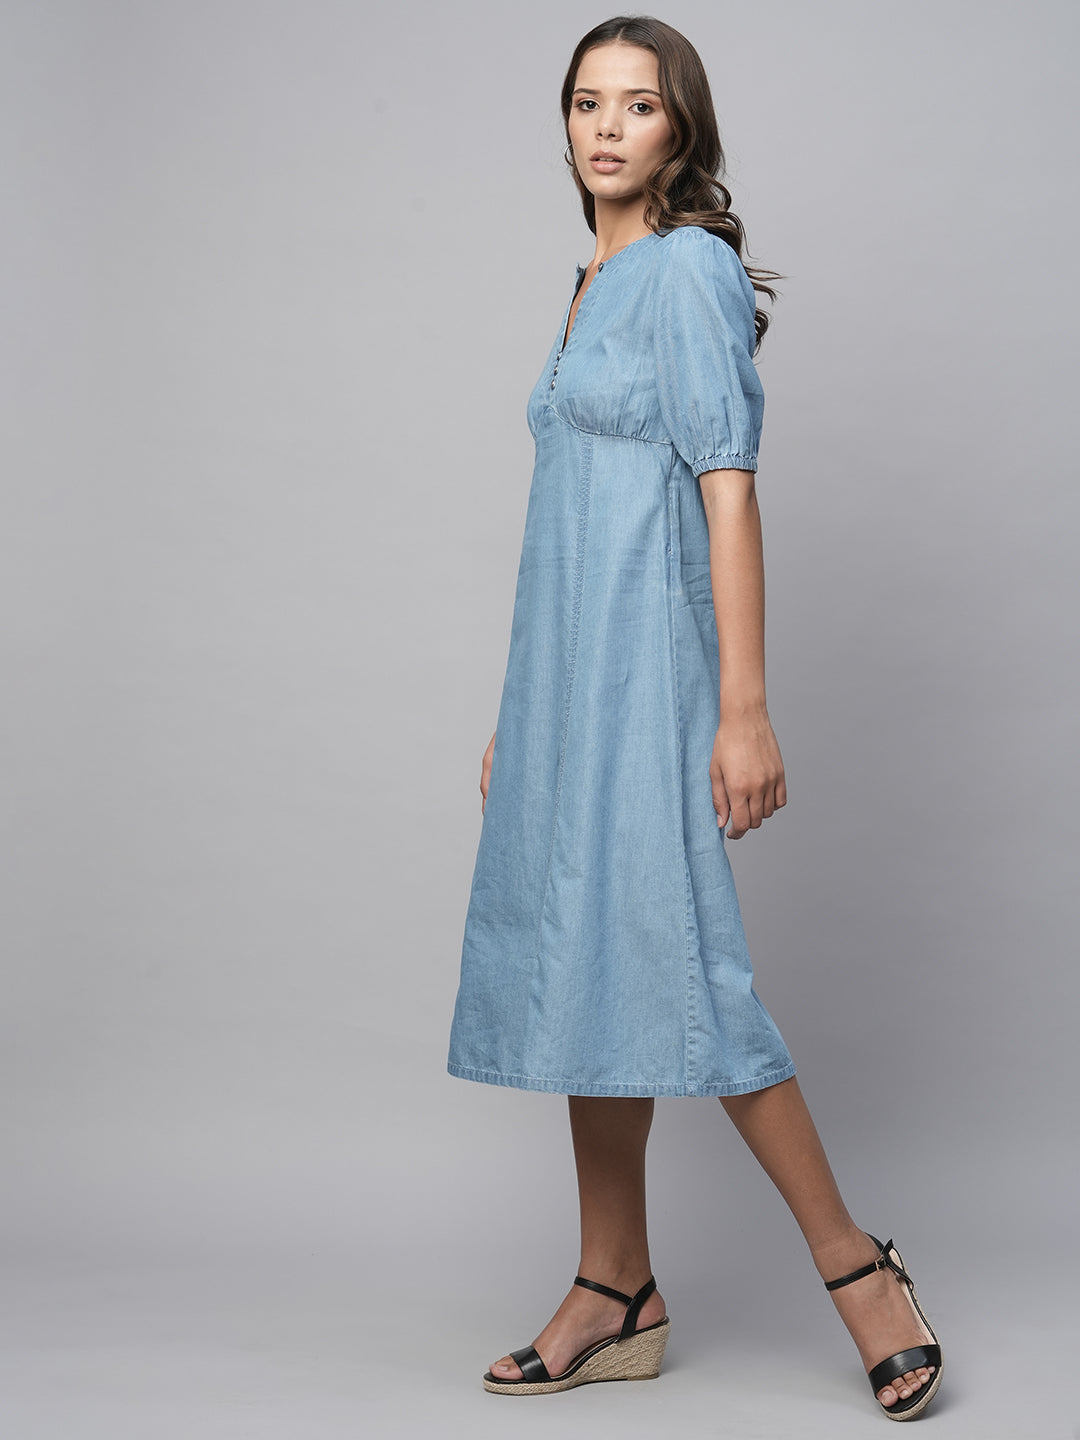 Cotton Tencel Denim gathered Basque Panelled A-Line Dress